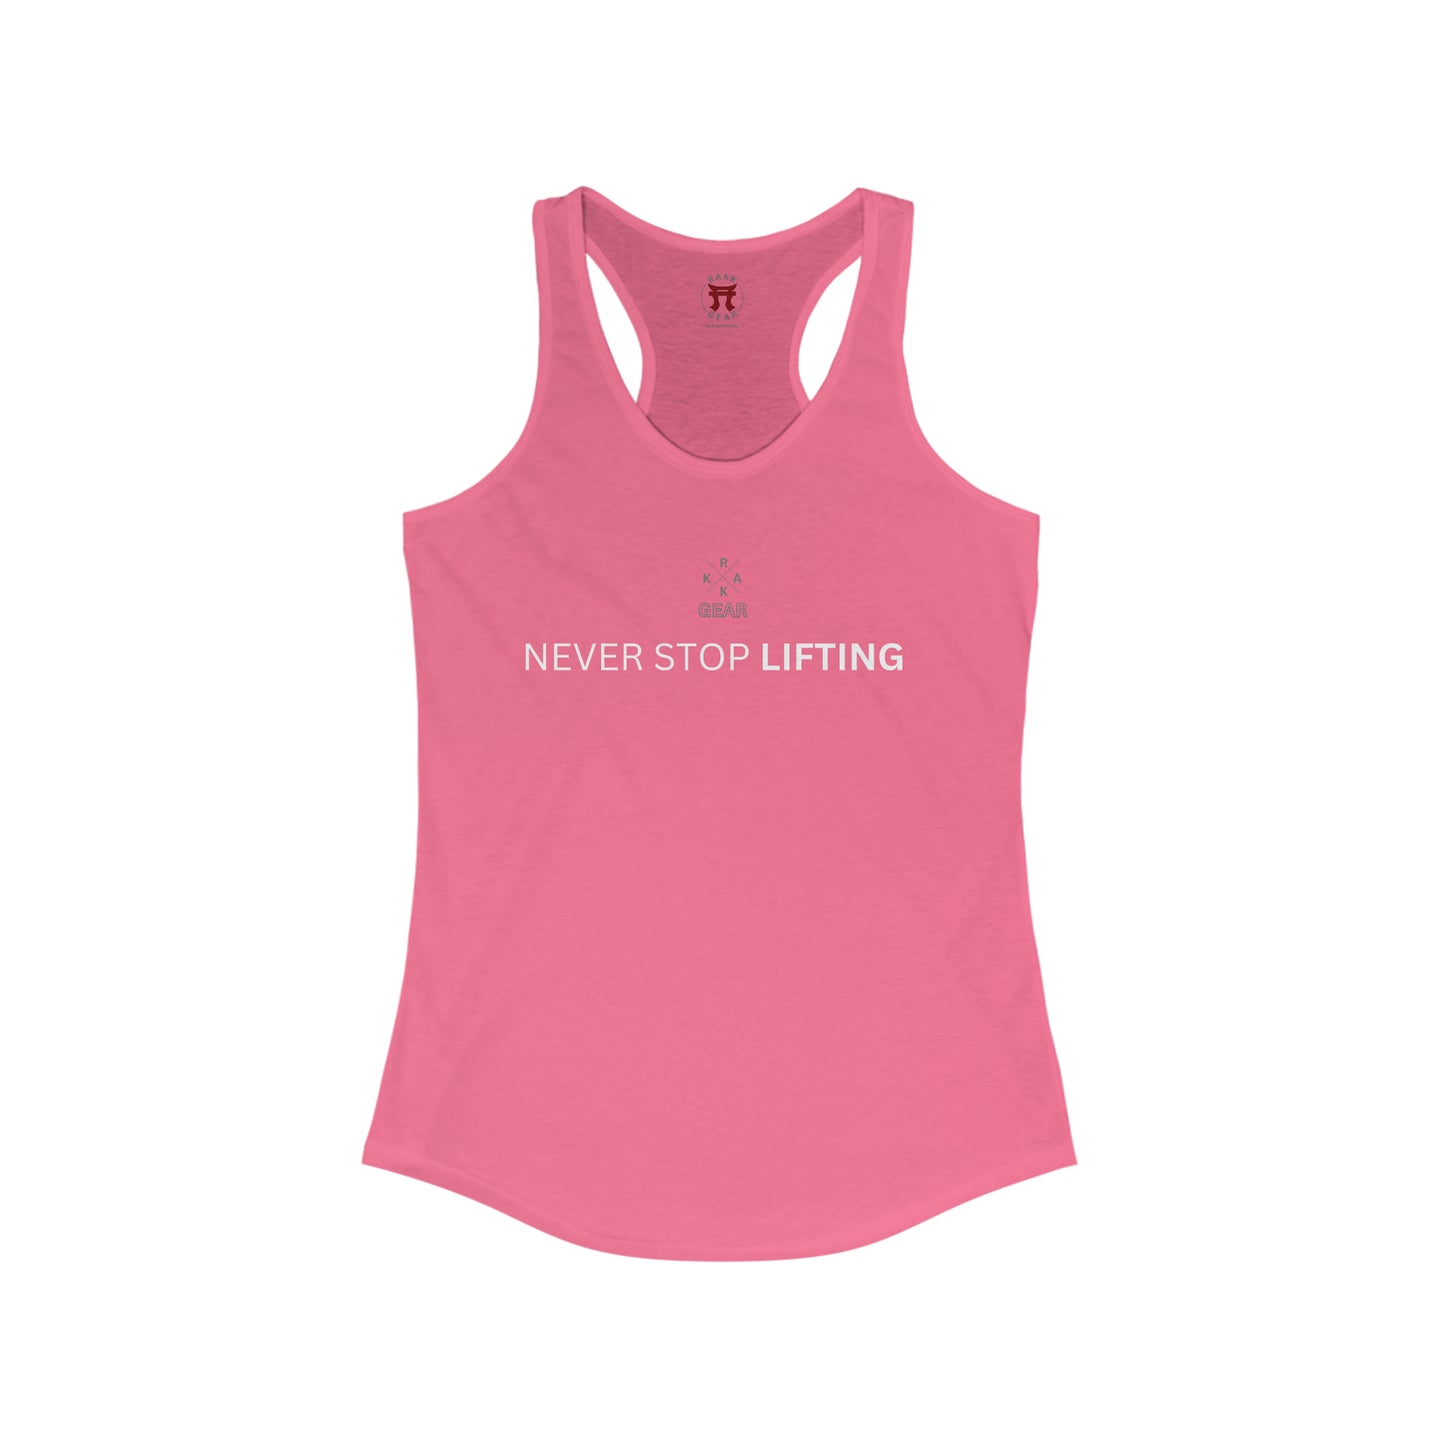 Rakkgear Women's Never Stop Lifting Tank Top in pink